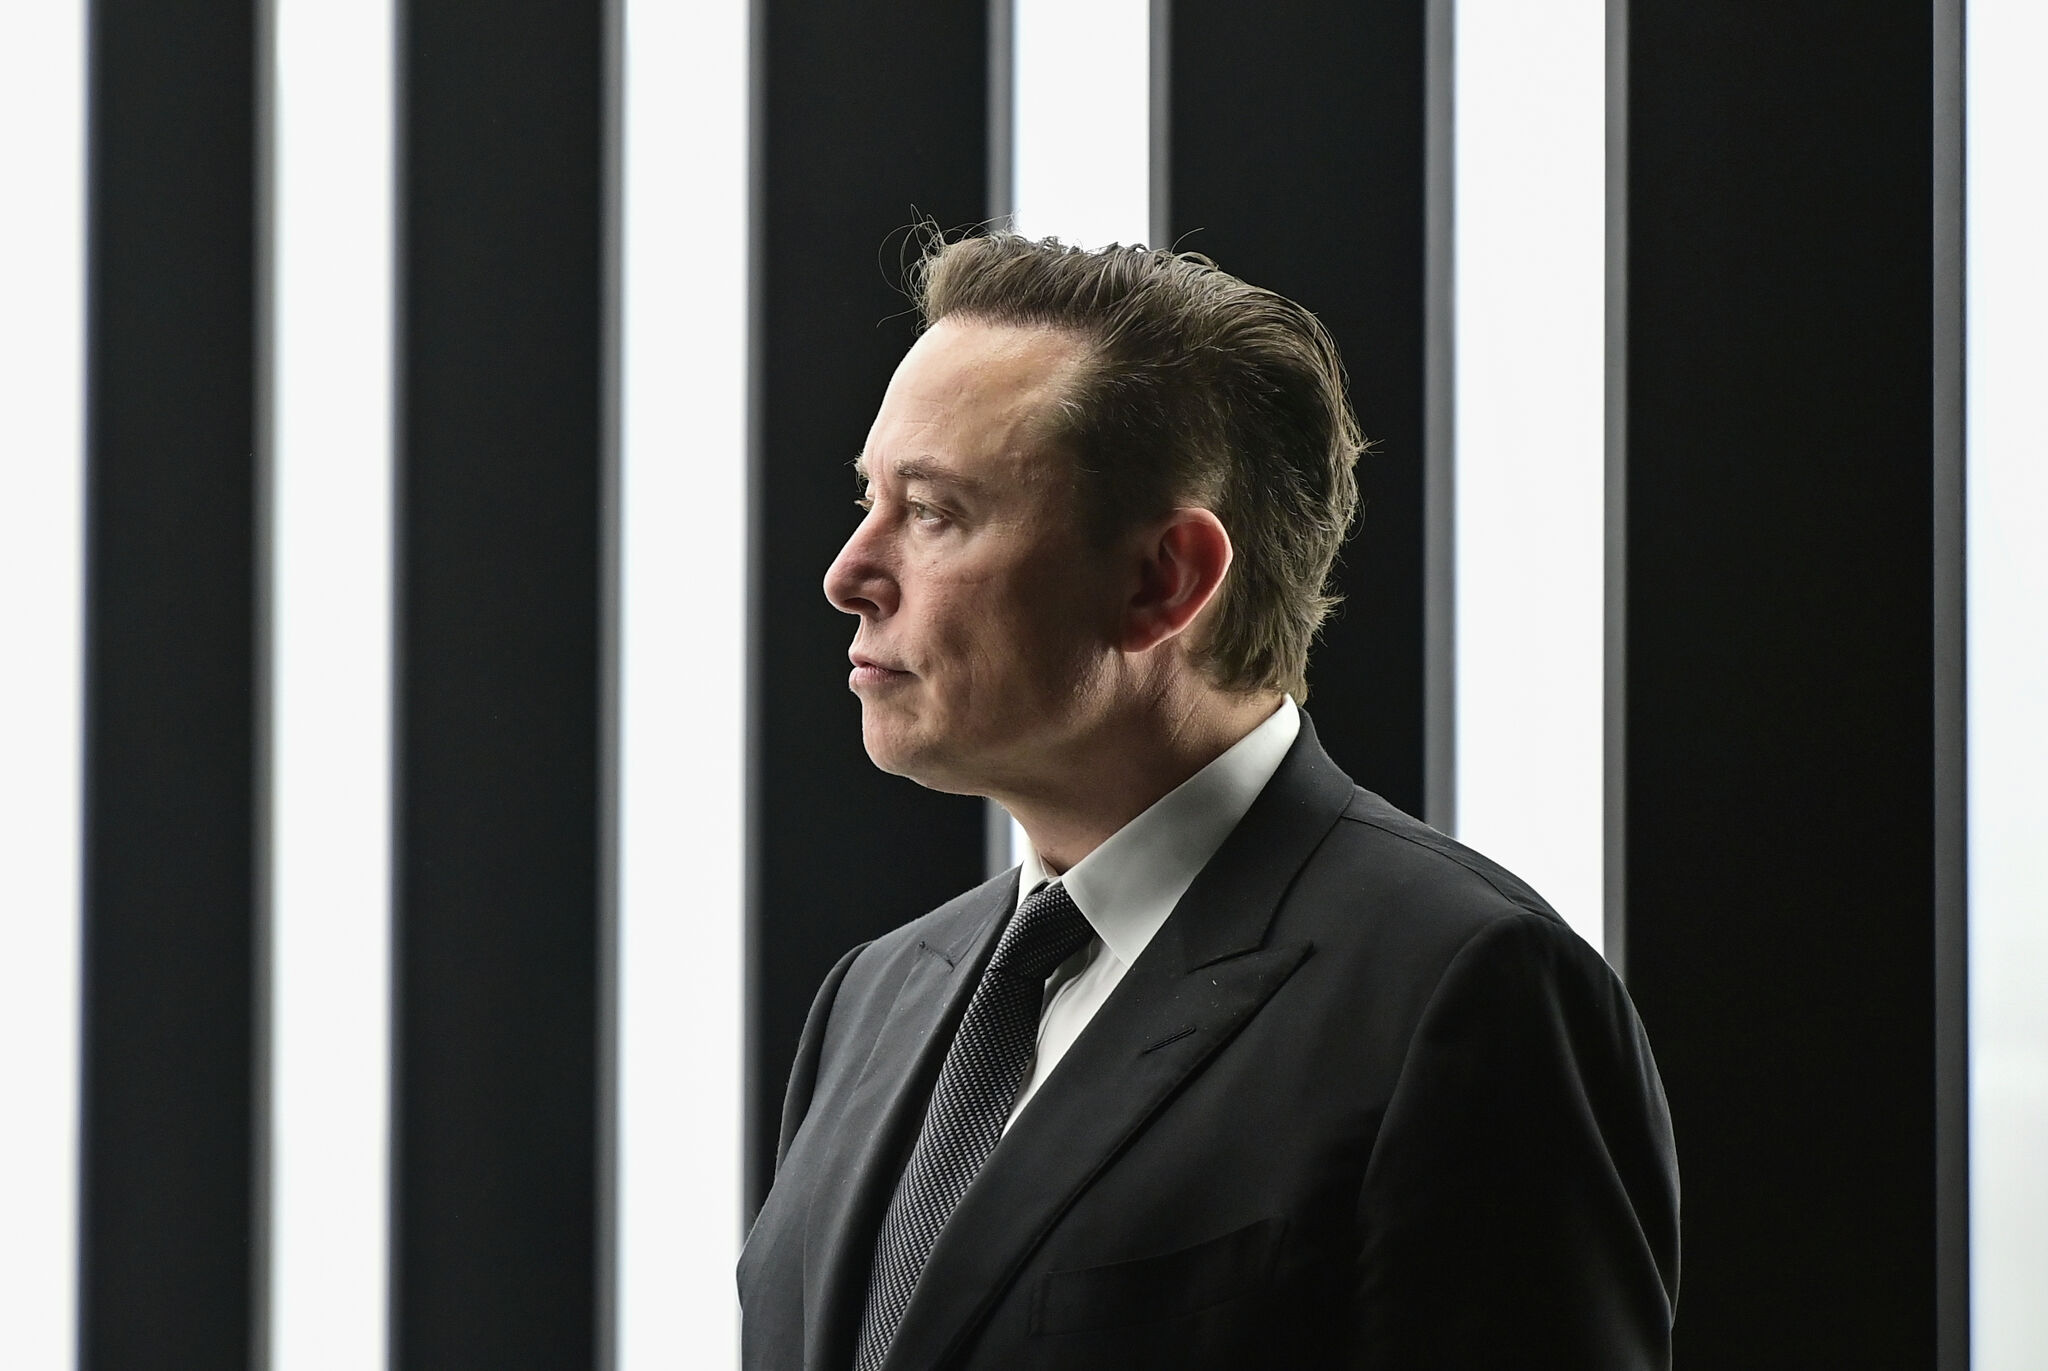 Despite Elon Musk's California criticism, Tesla says its second HQ will reside in Palo Alto